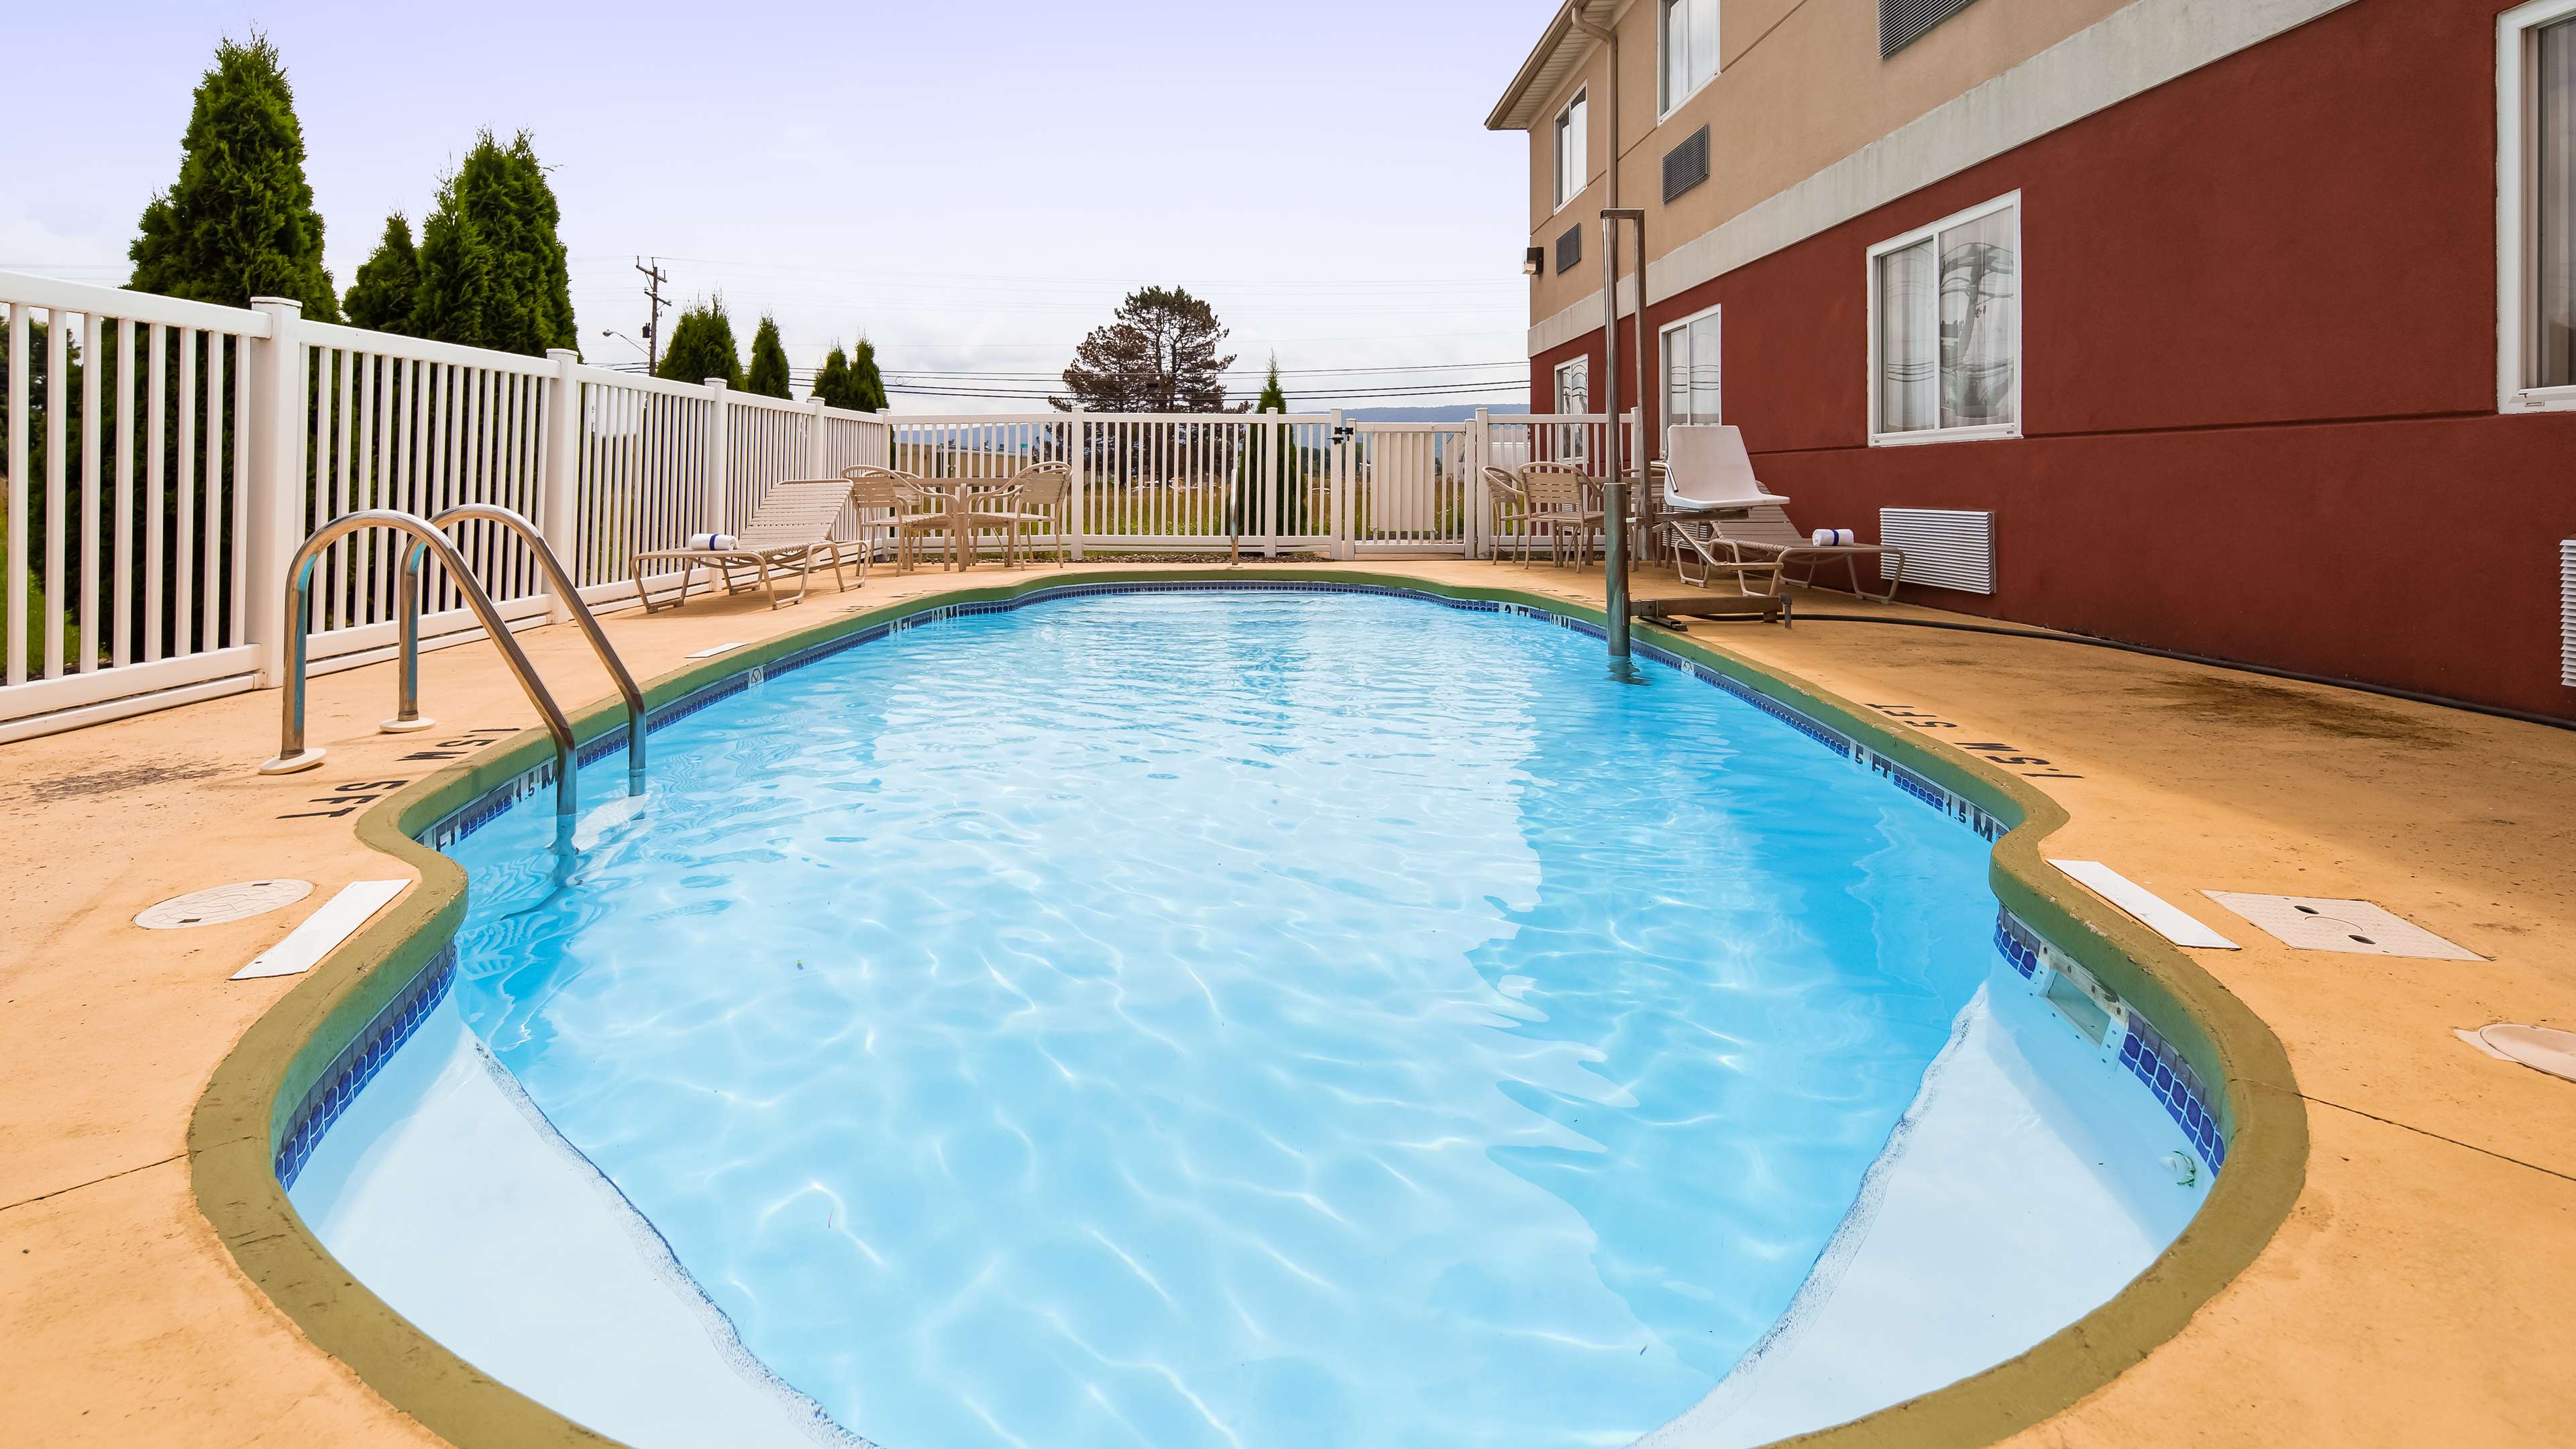 Enjoy our outdoor heated pool, open seasonally